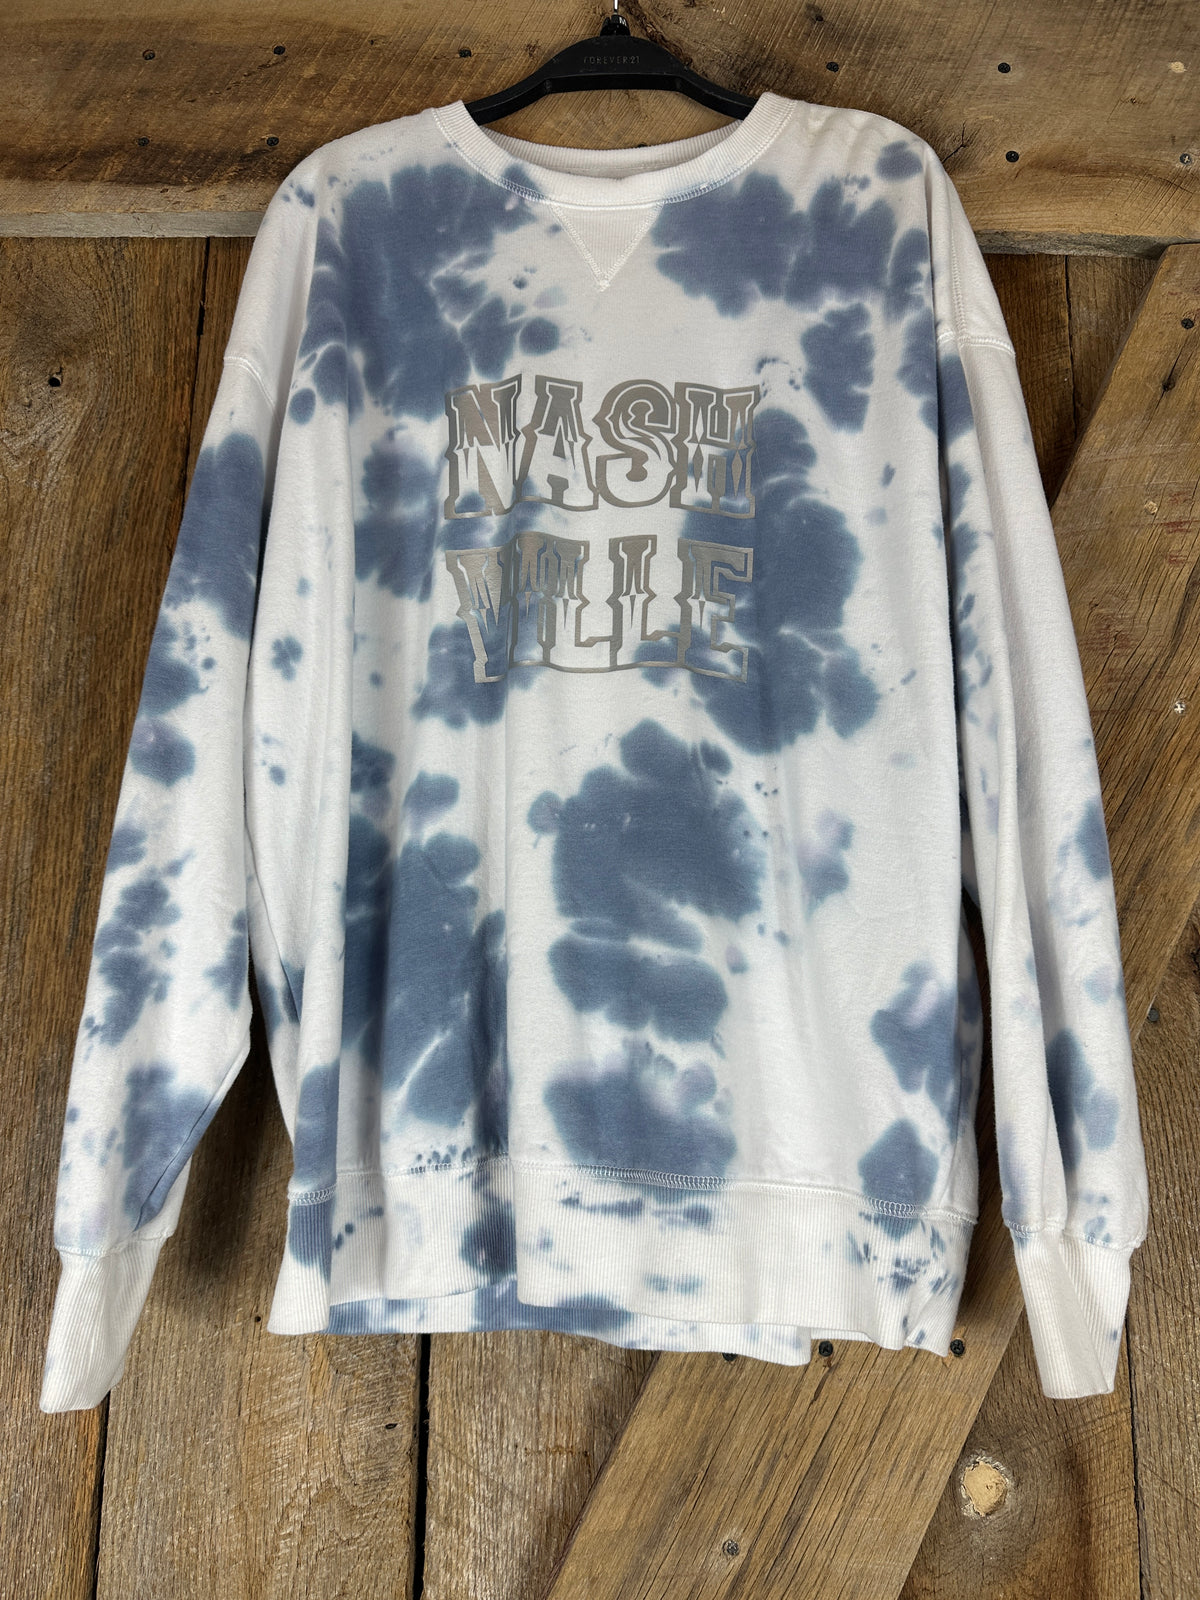 Nashville Indigo Sweatshirt - medium